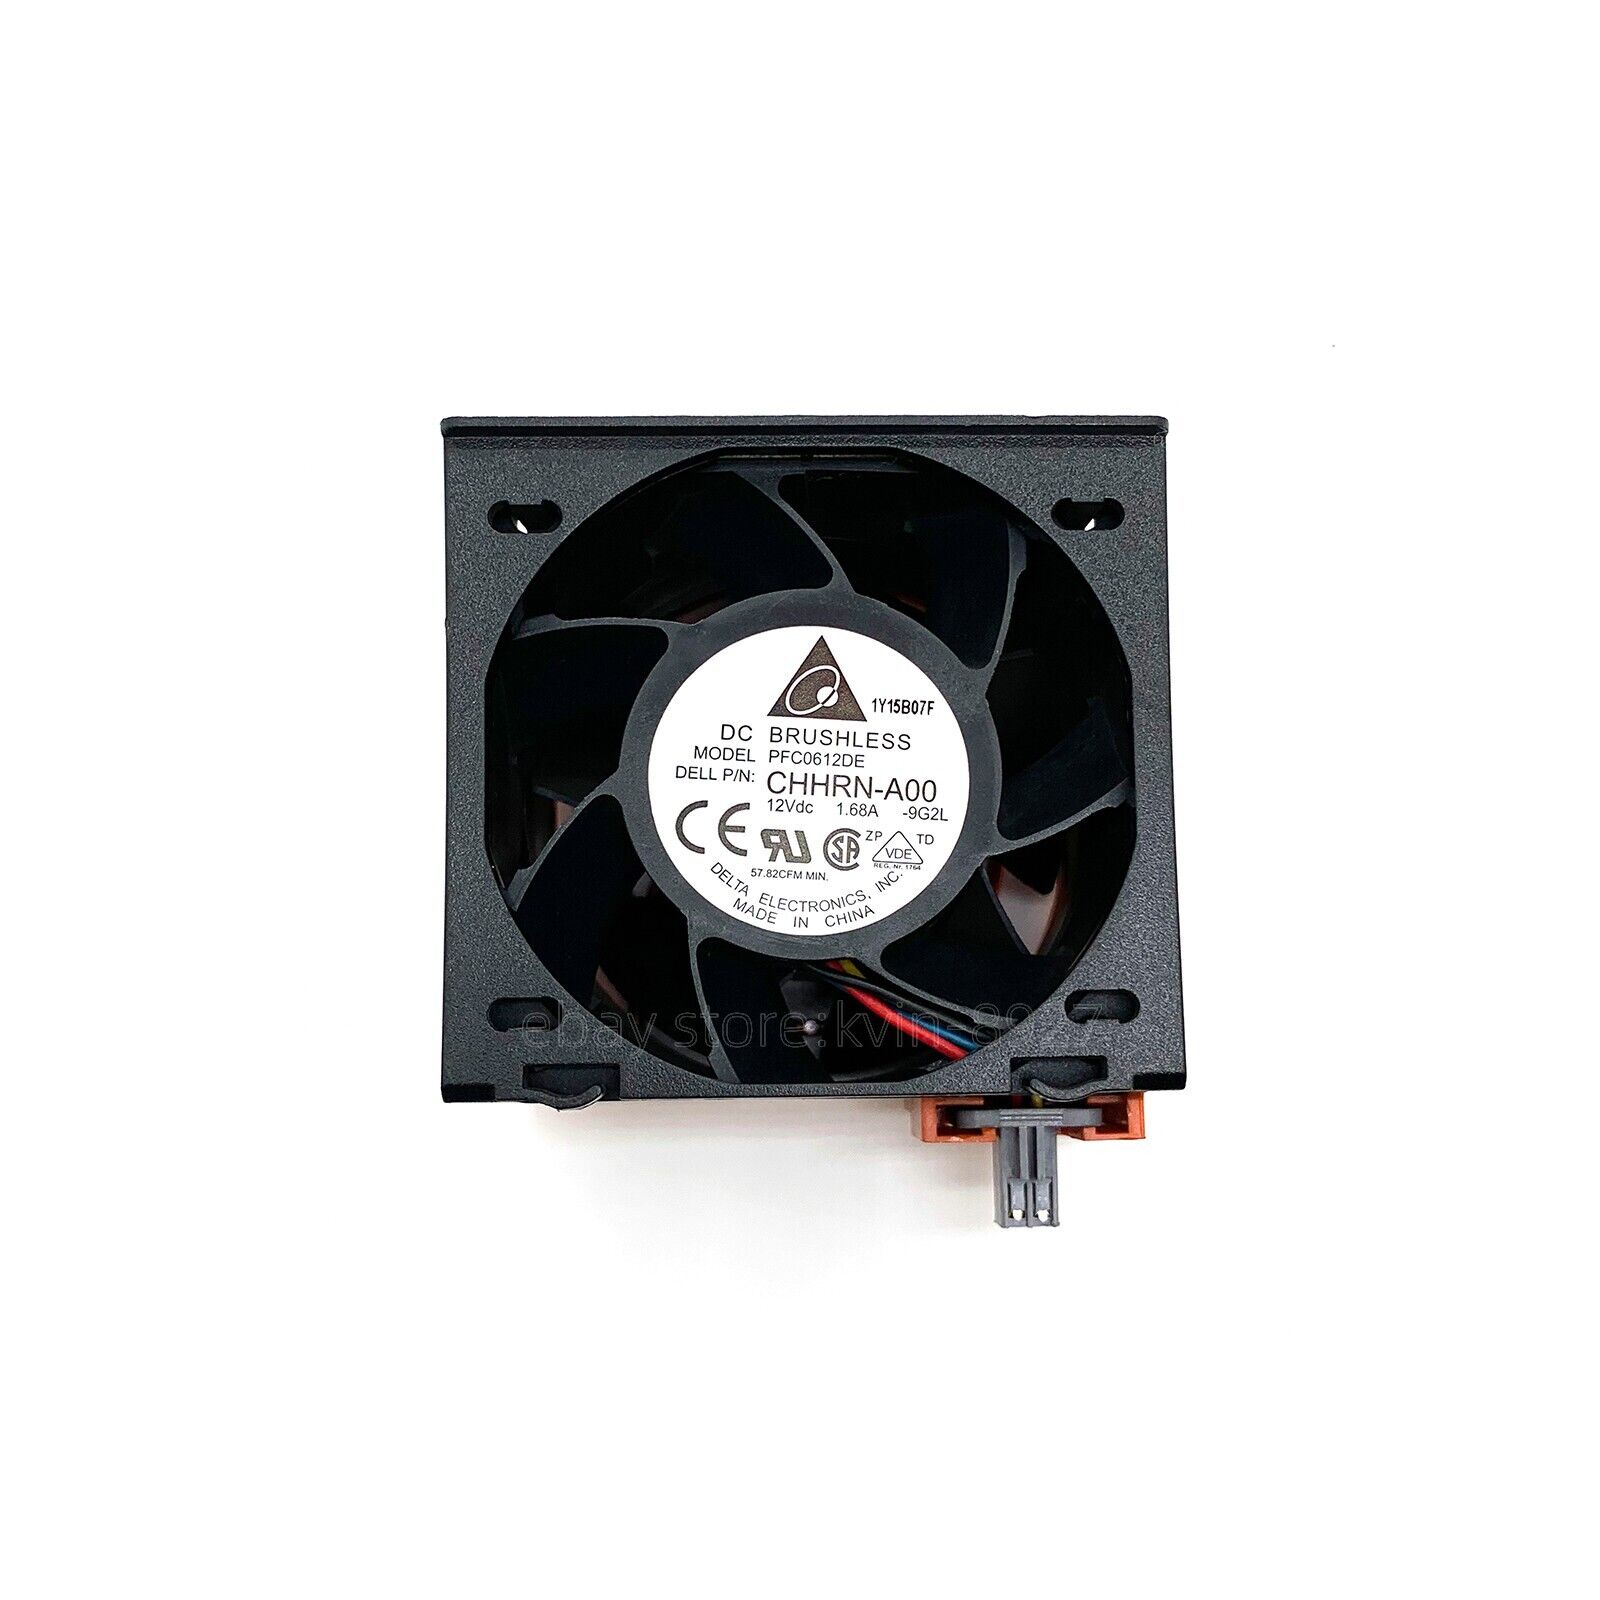 2PCS Delta PFCO612DE 12V 1.68A DELL CHHRN-A00 Brushless Server Cooling Fan